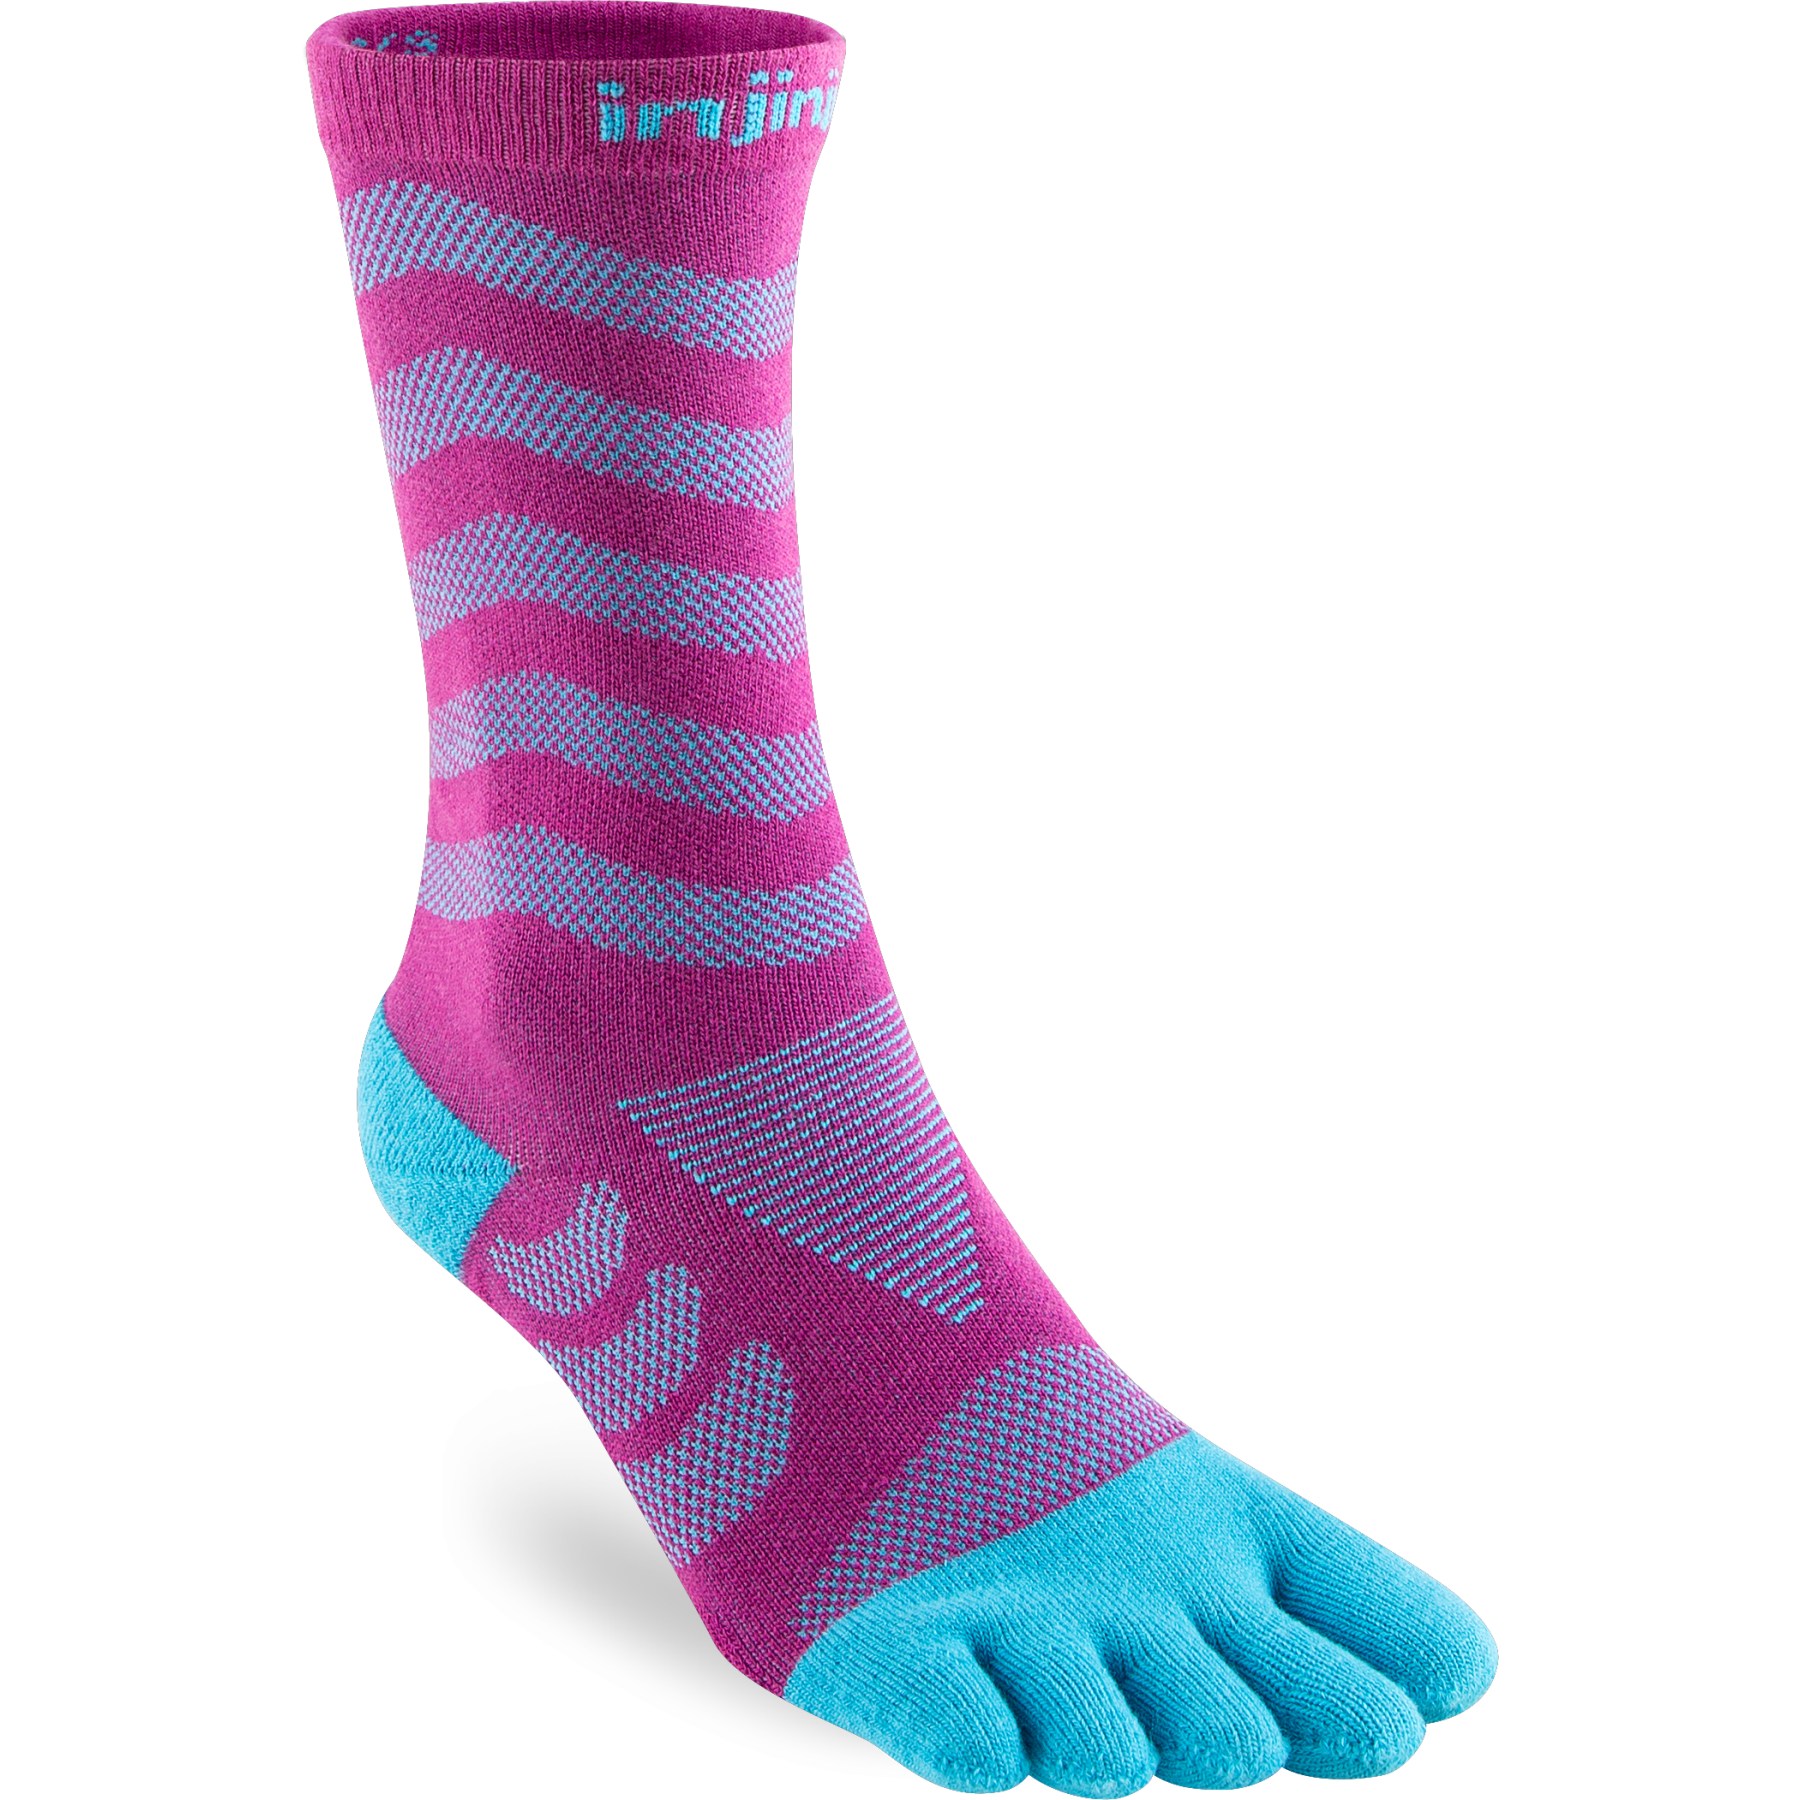 Produktbild von Injinji Ultra Run Crew Coolmax Damen Socken - jam